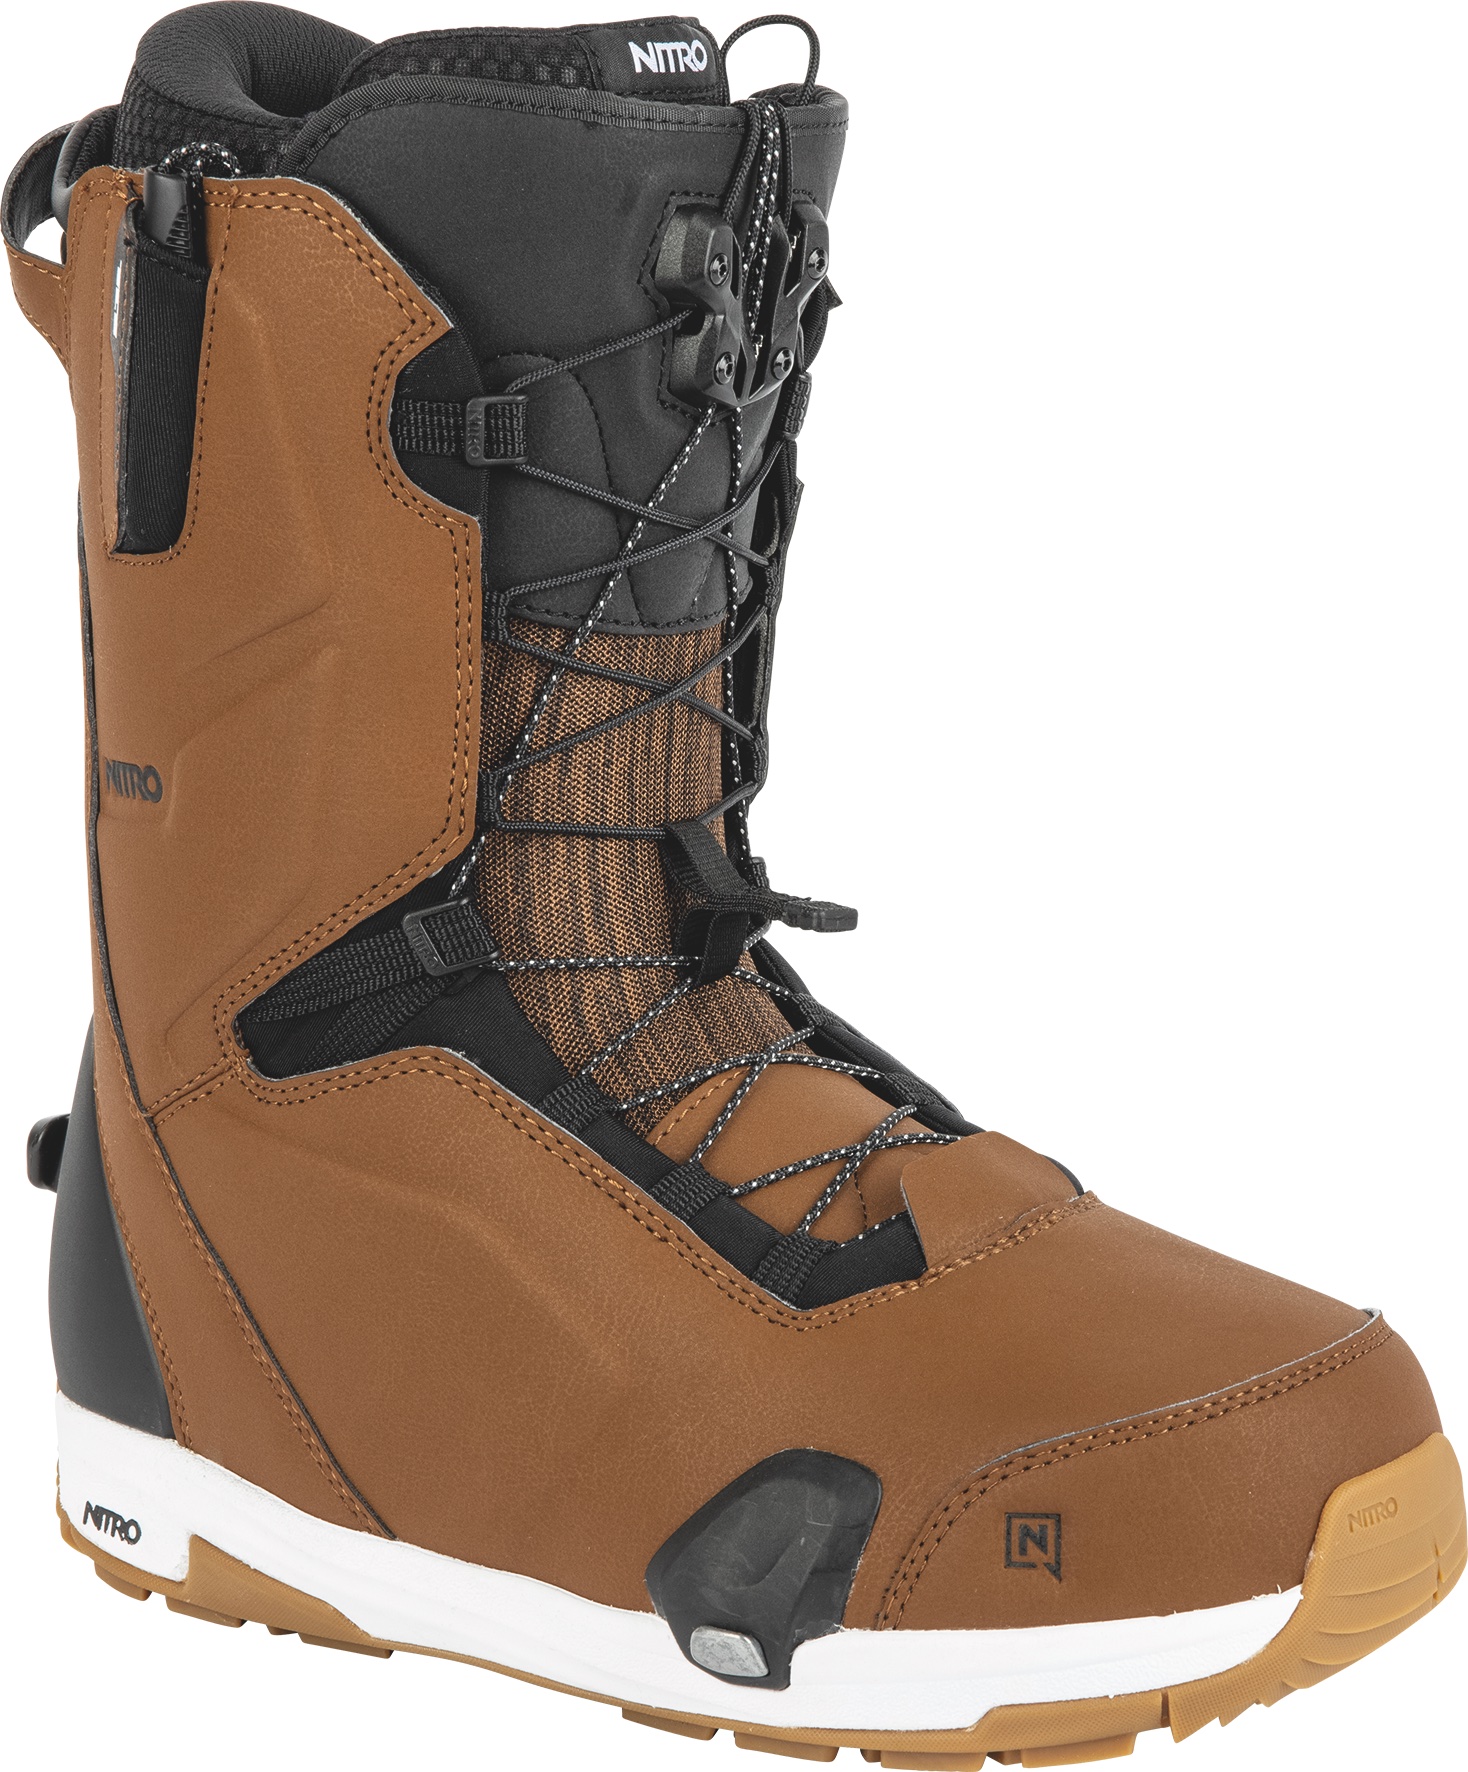 Nitro 22/23 Snowboard Boots